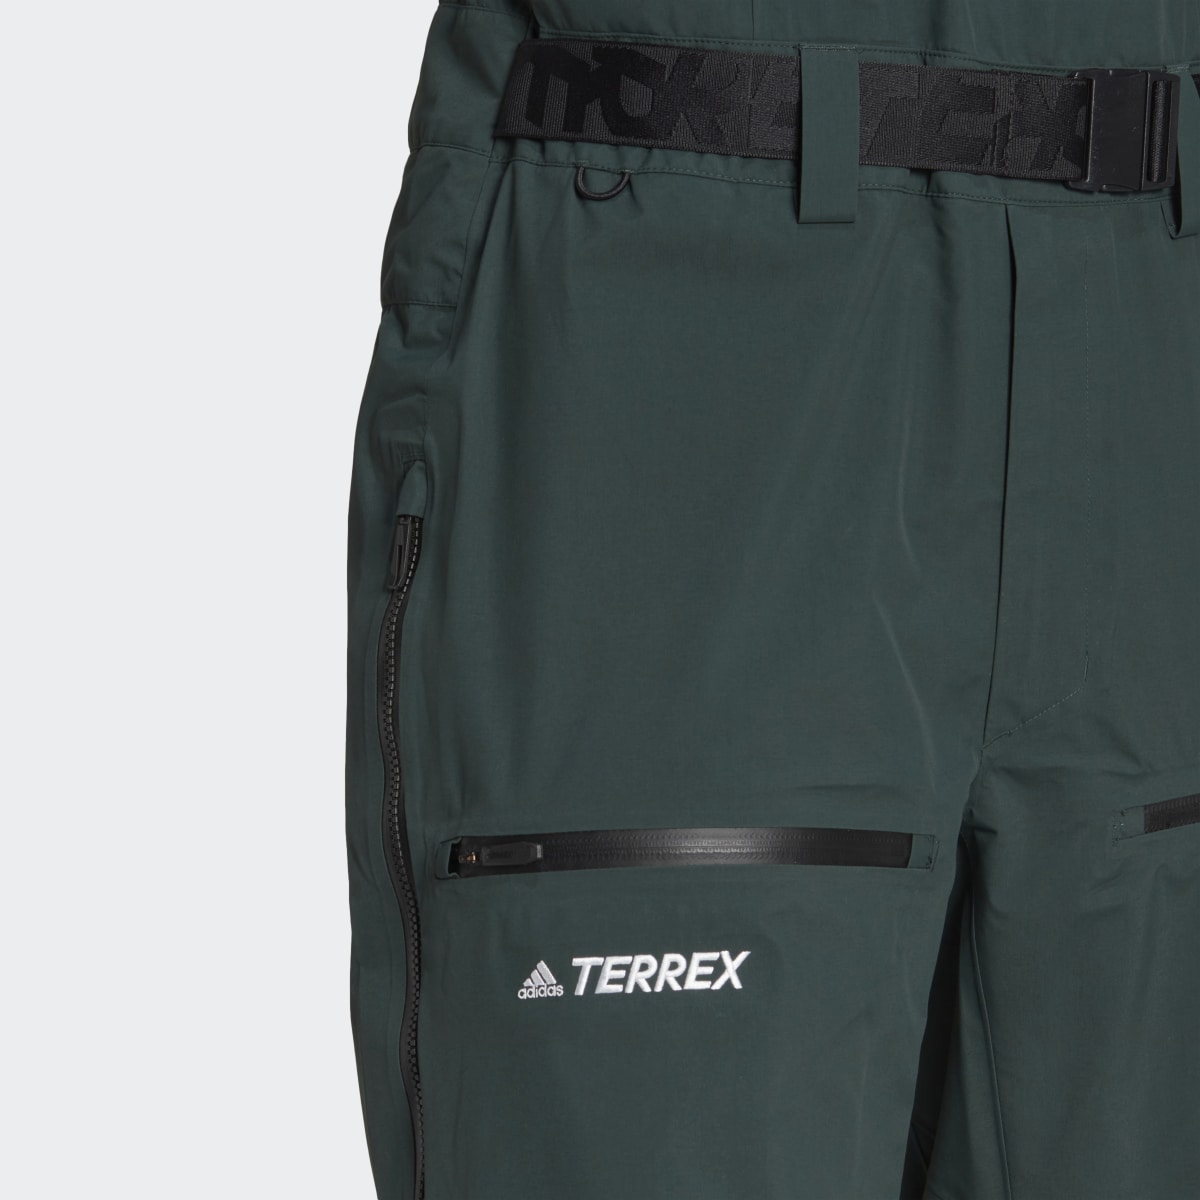 Adidas TERREX 3Layer GORE TEX SNOW PANTS. 6